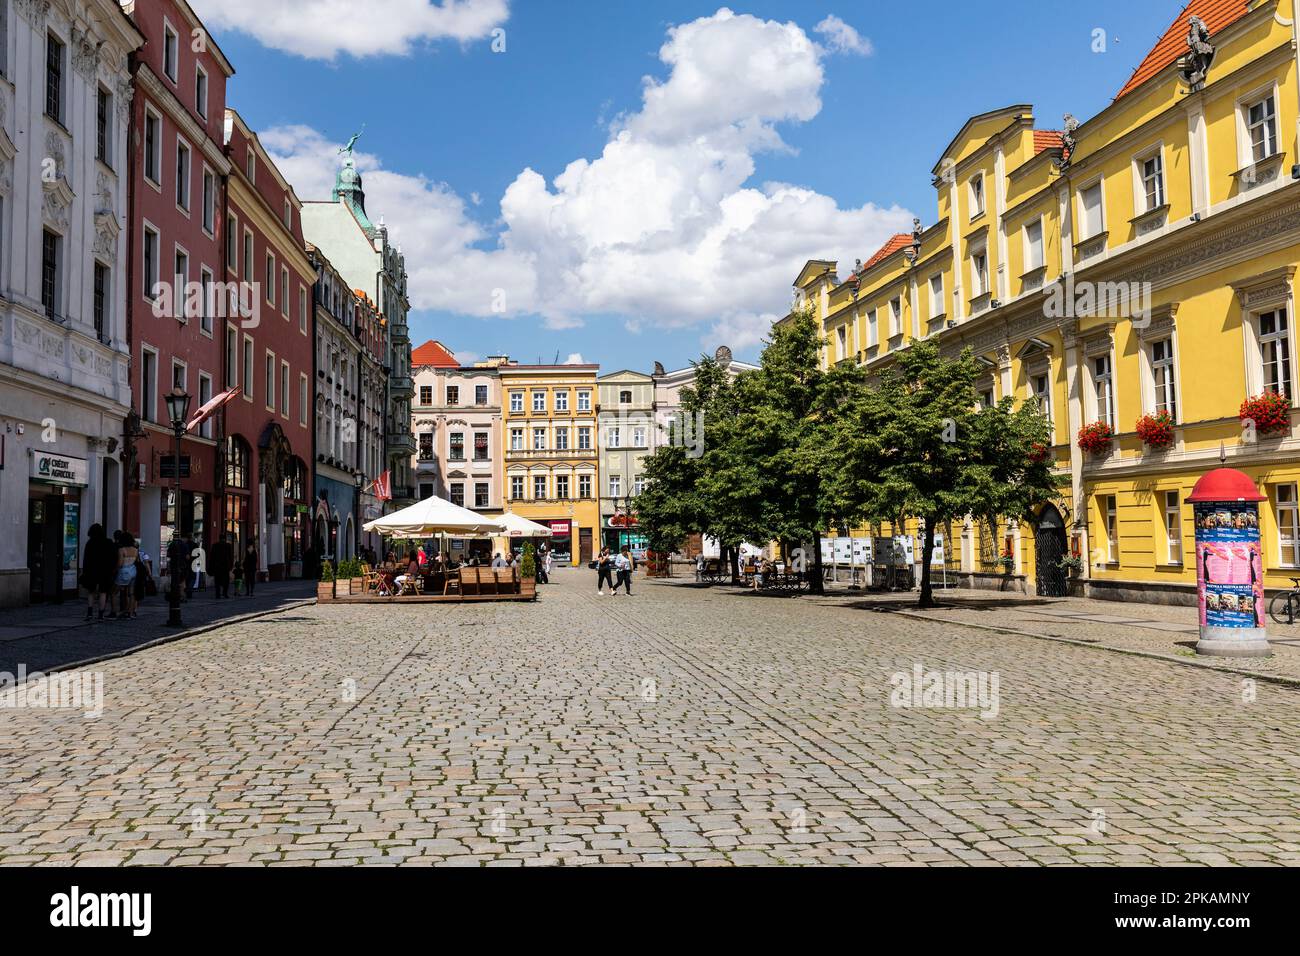 Europe, Poland, Lower Silesia, Swidnica / Schweidnitz, city center Stock Photo